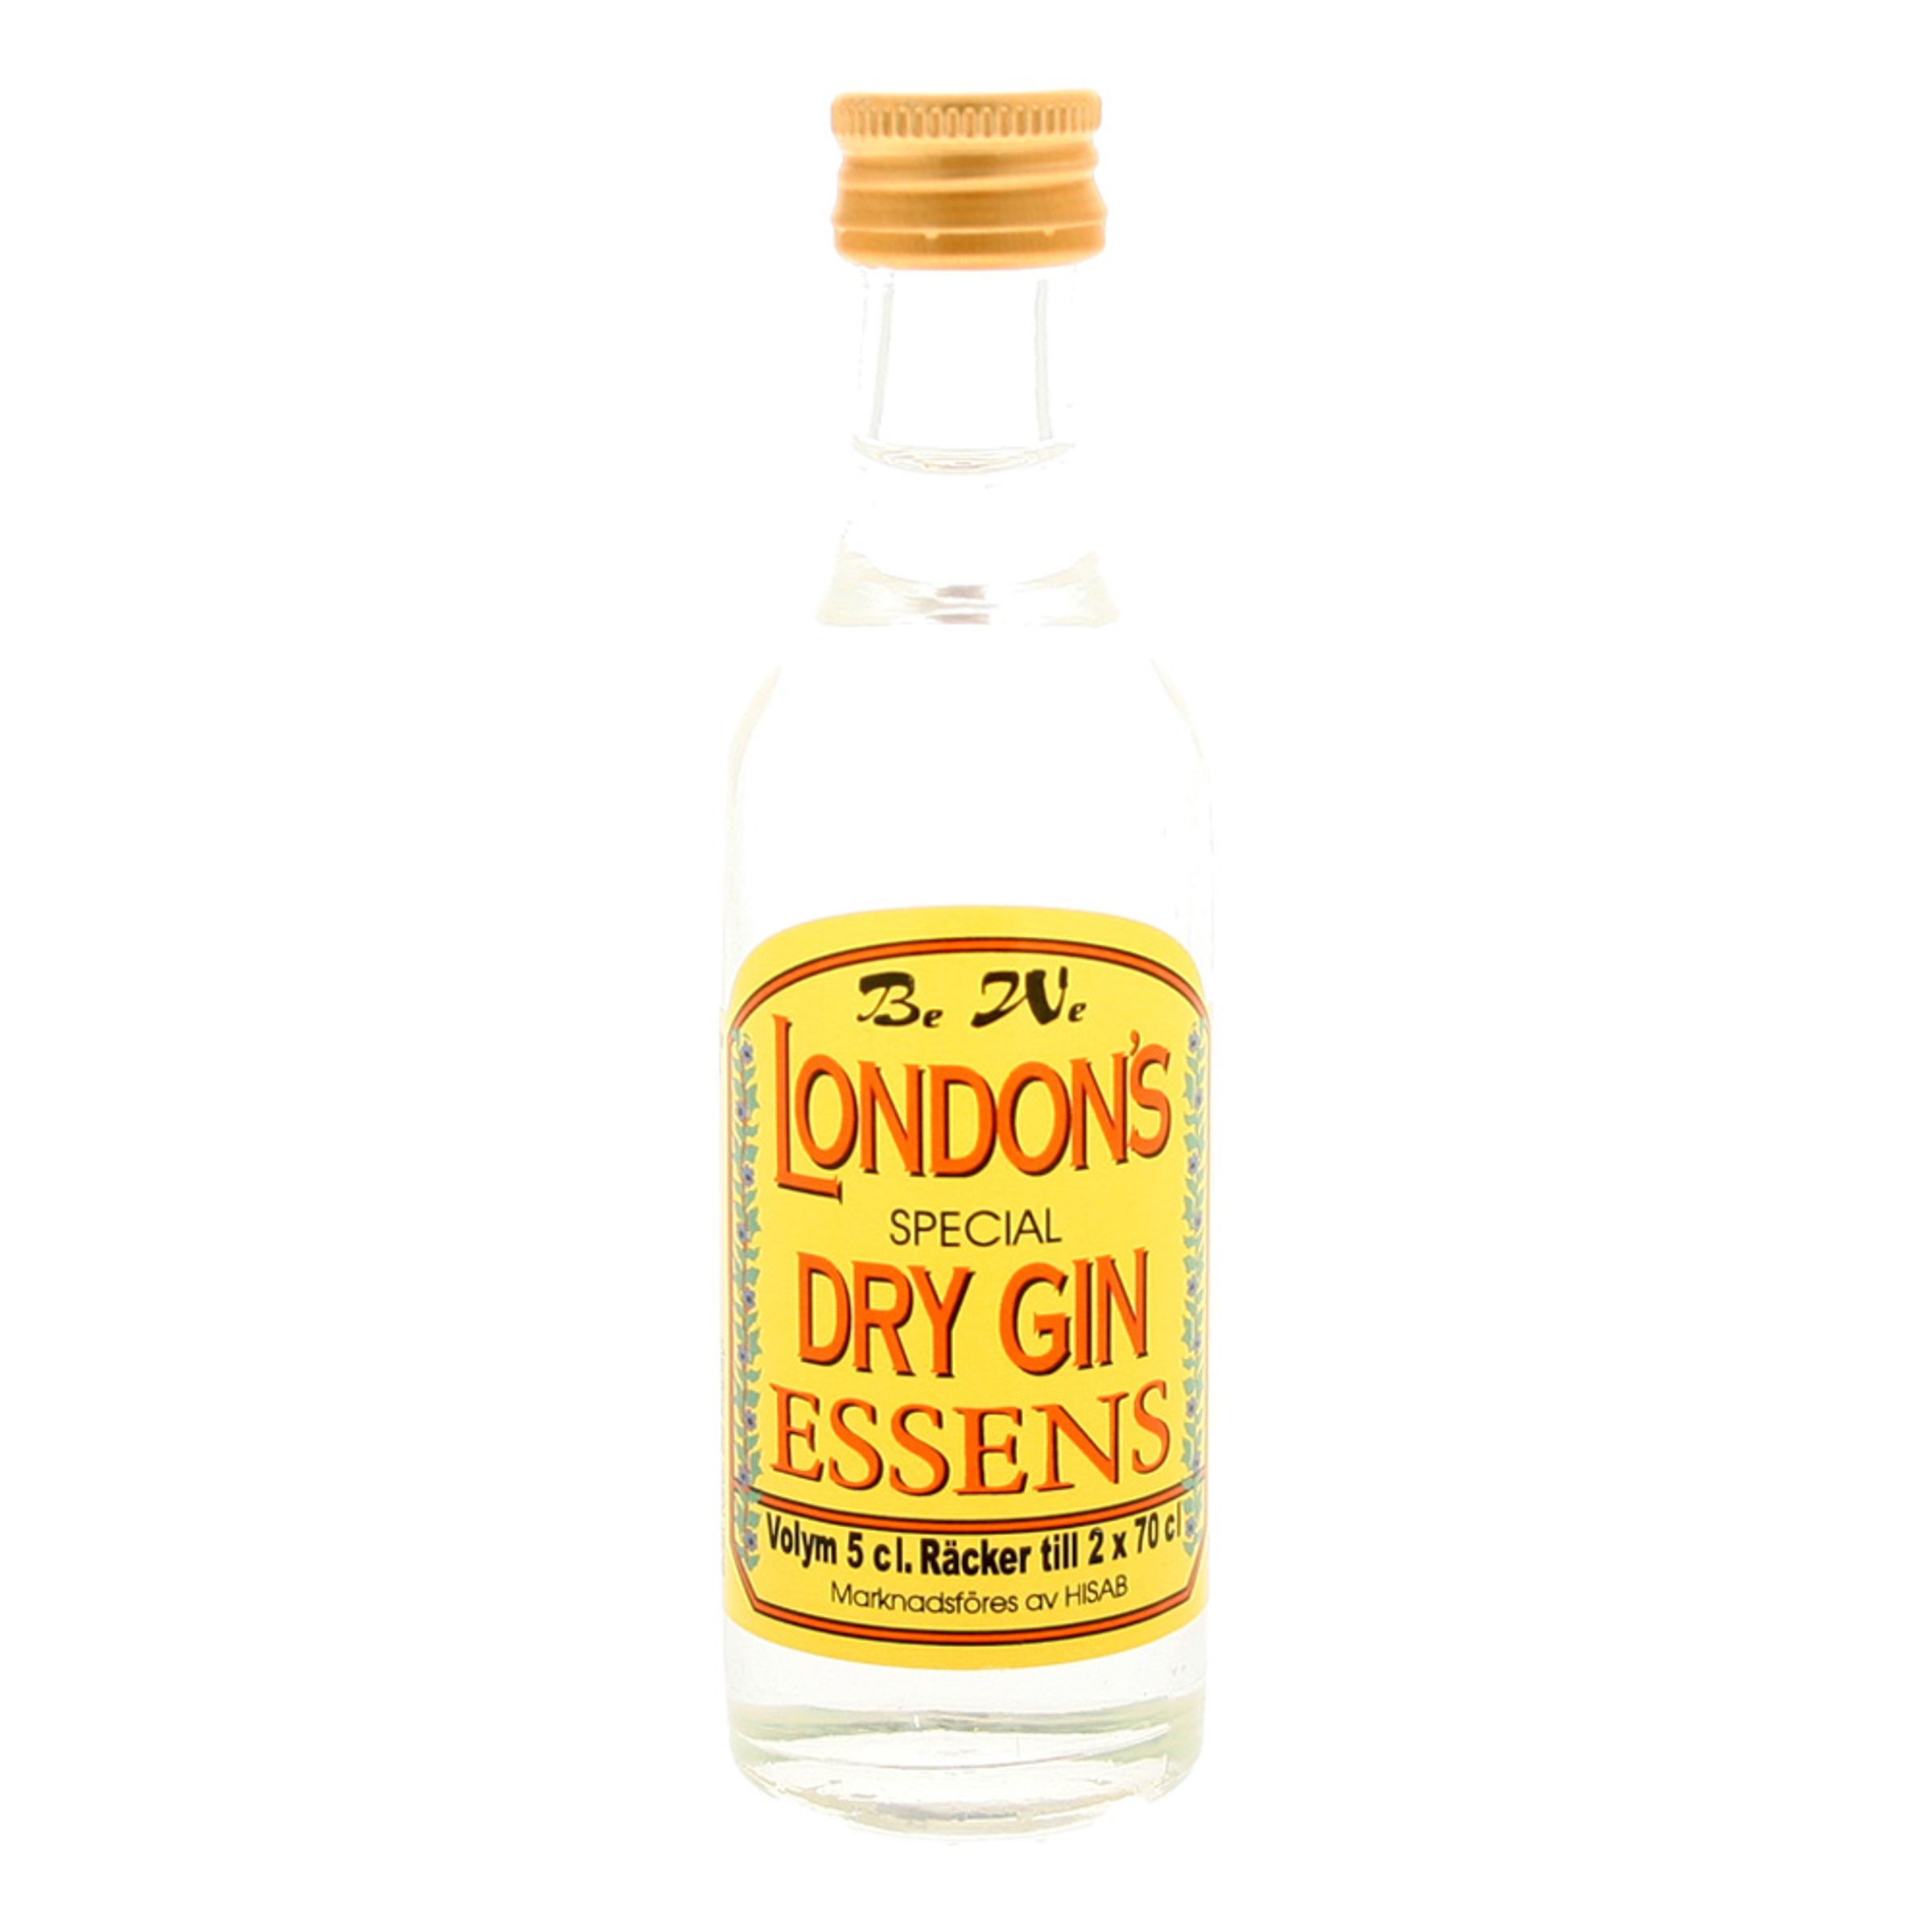 London's Dry Gin Essens - 5 cl